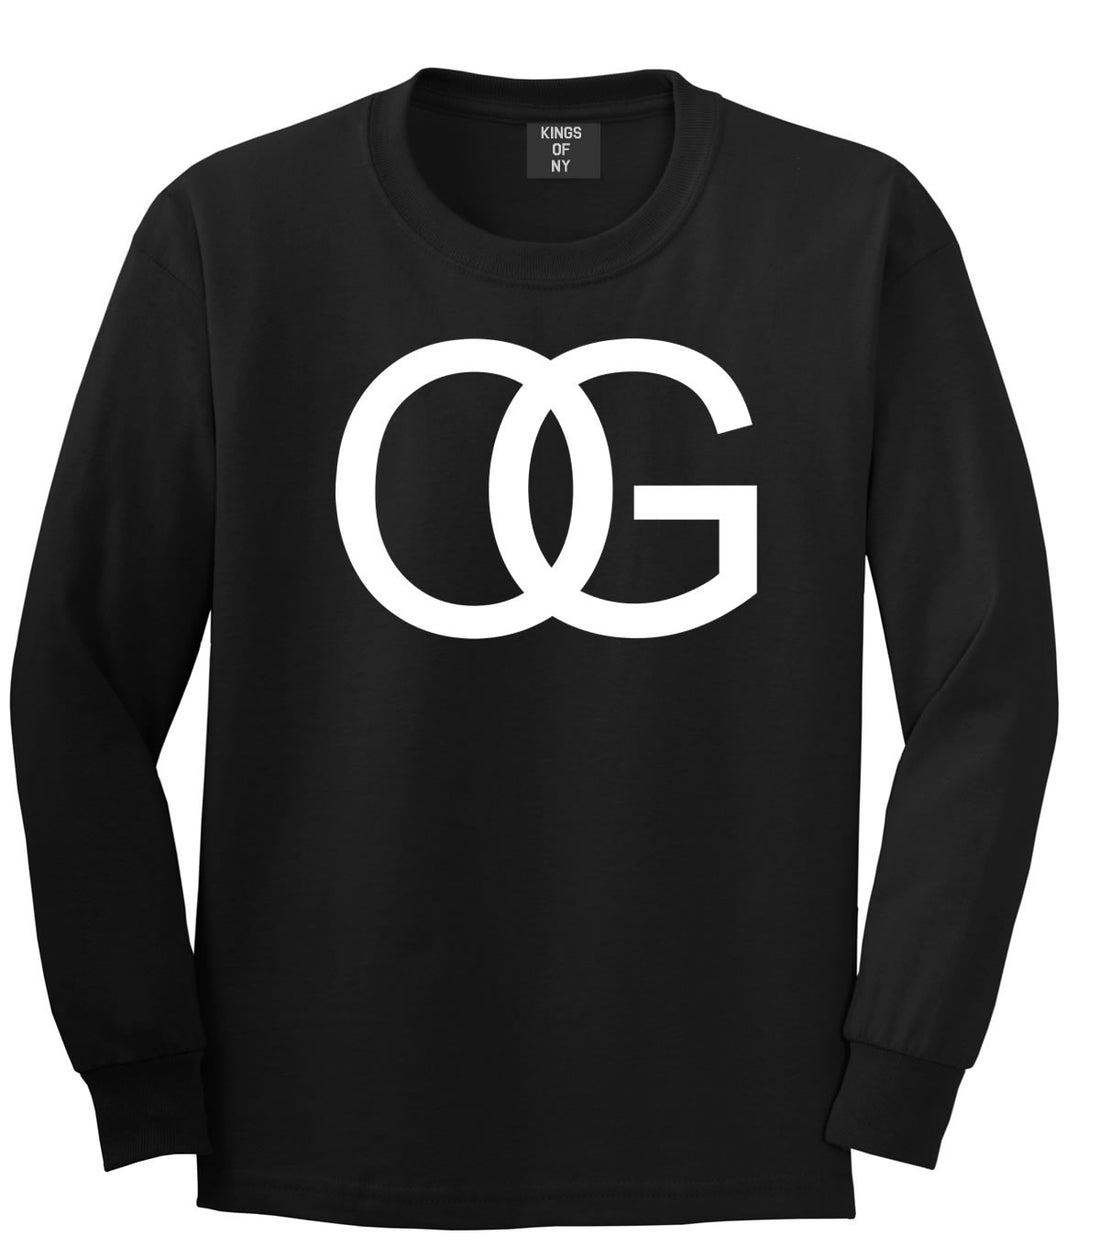 OG Original Gangsta Gangster Style Green Long Sleeve Boys Kids T-Shirt In Black by Kings Of NY